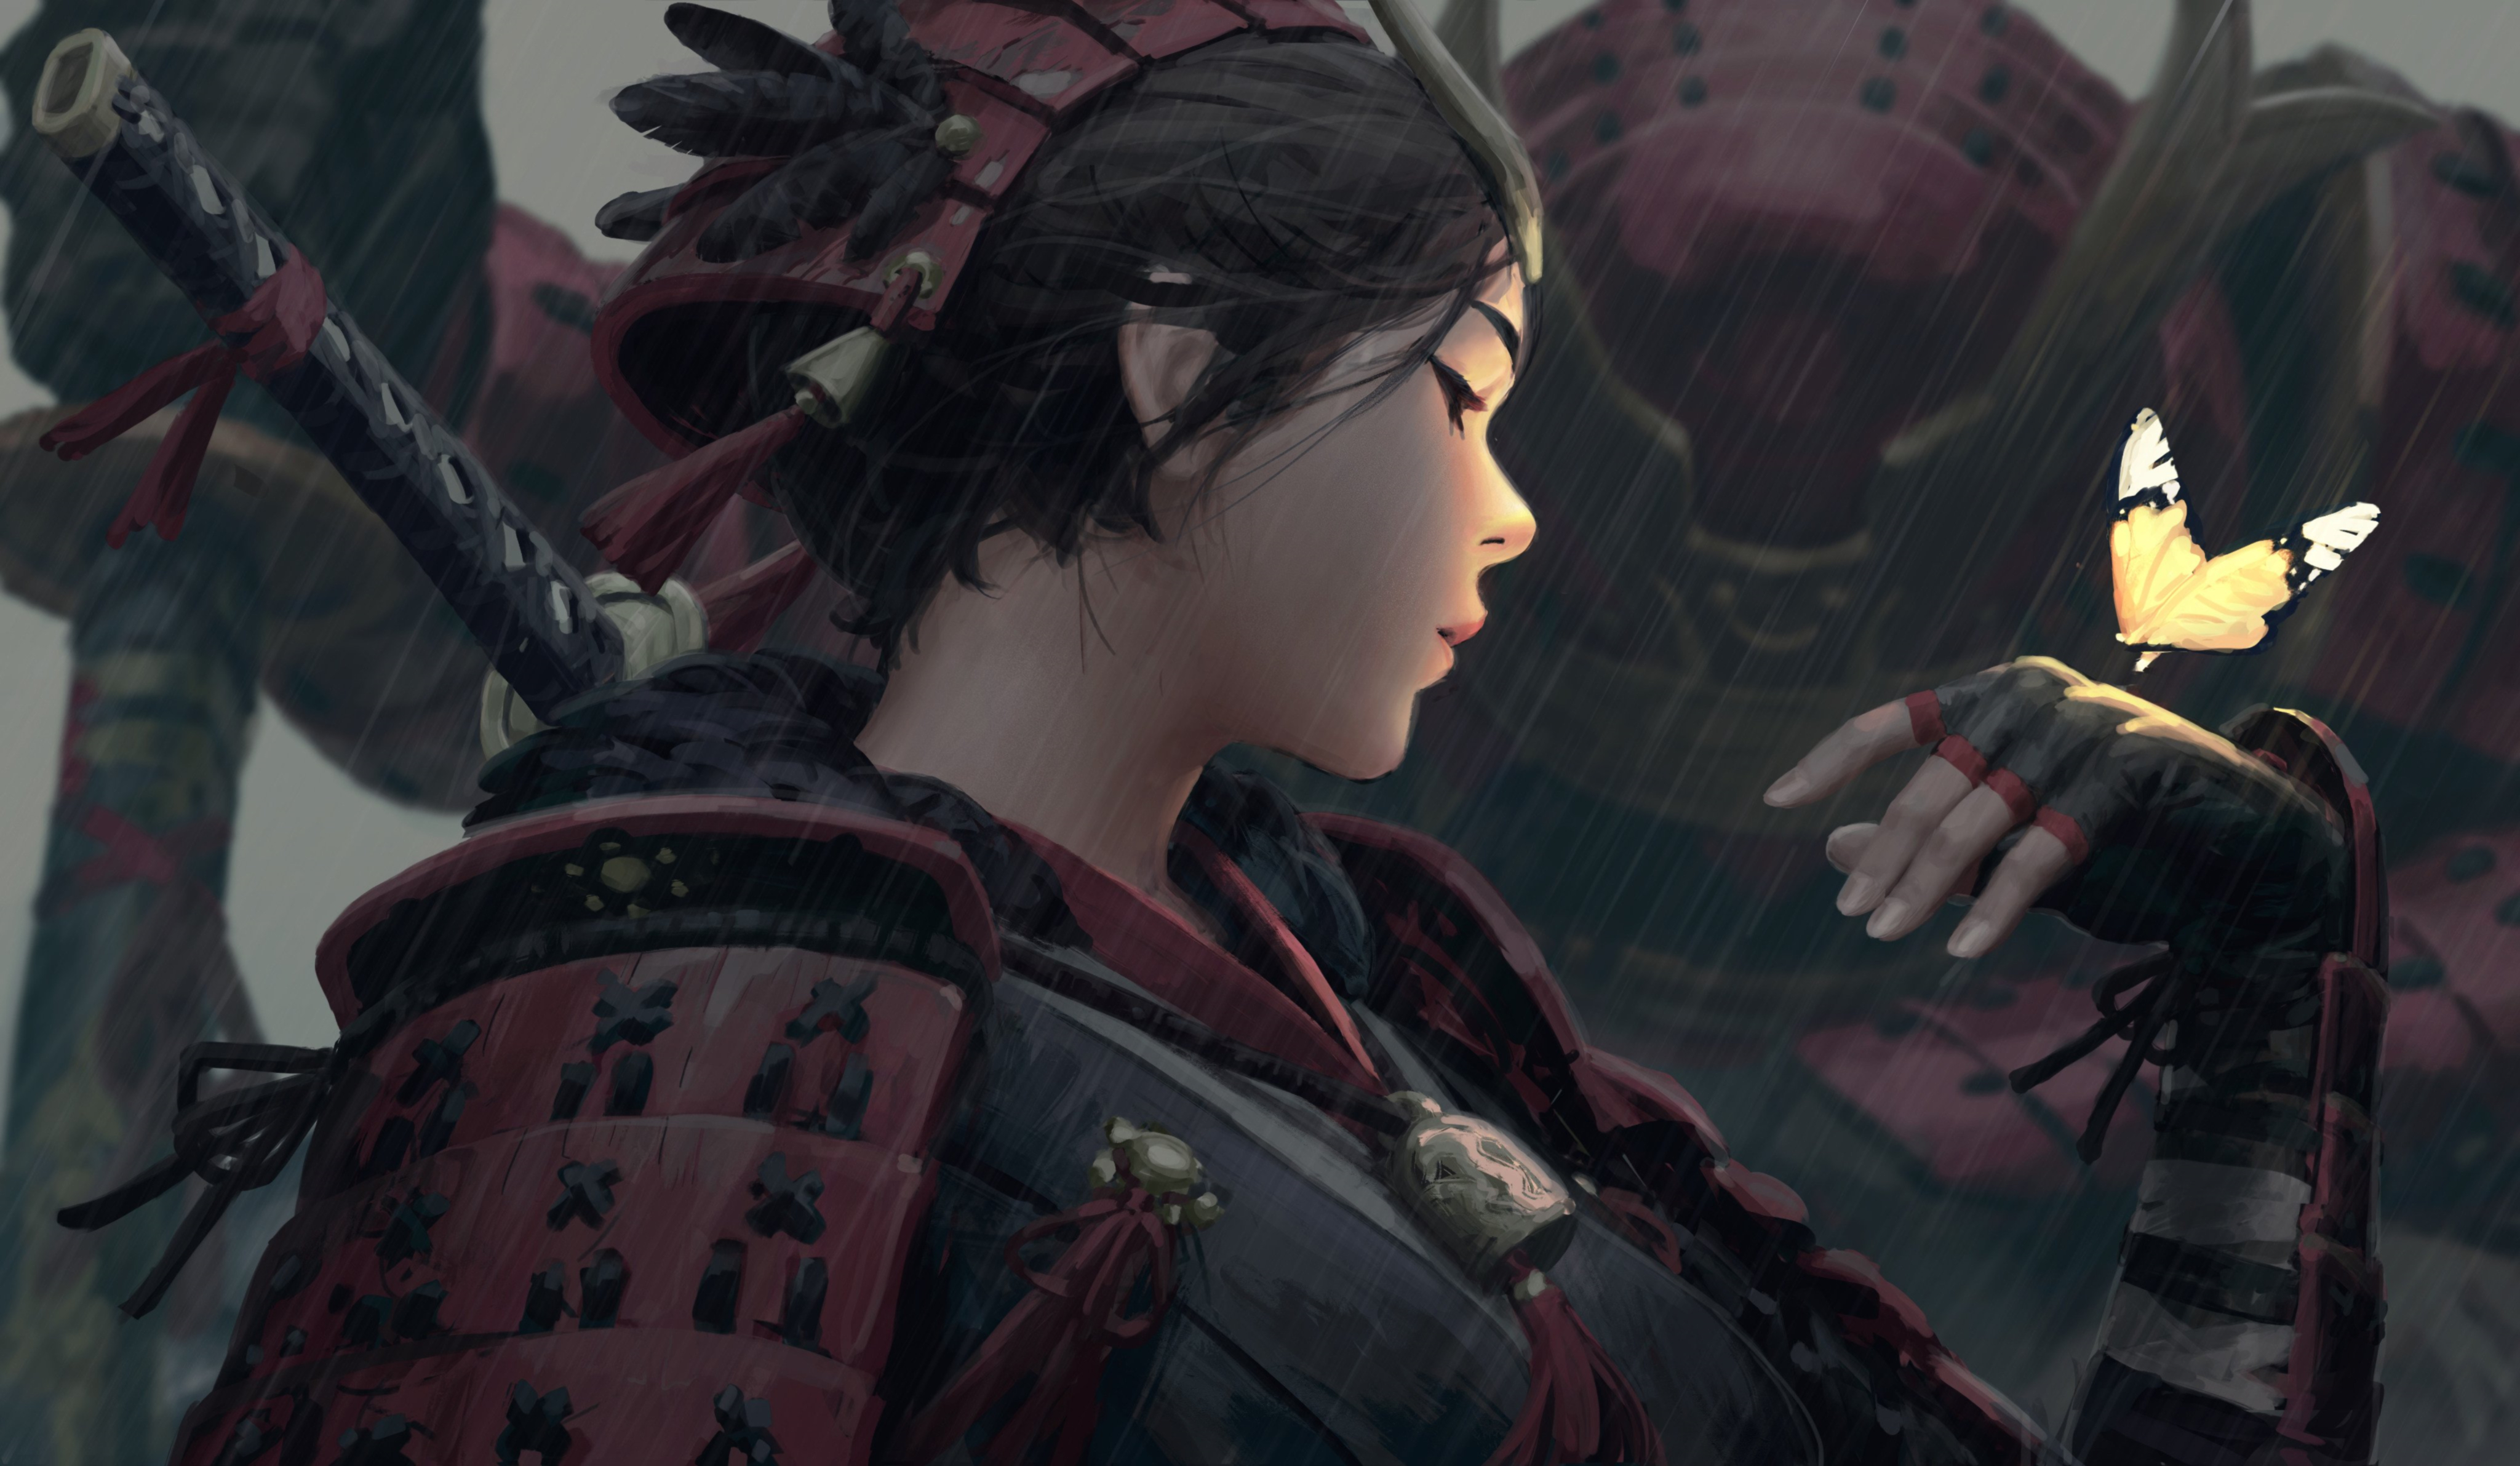 Samurai Women Fantasy Girl Warrior Girls Katana Weapon Armor Armored Black Hair Profile Feathers Hel 4096x2383